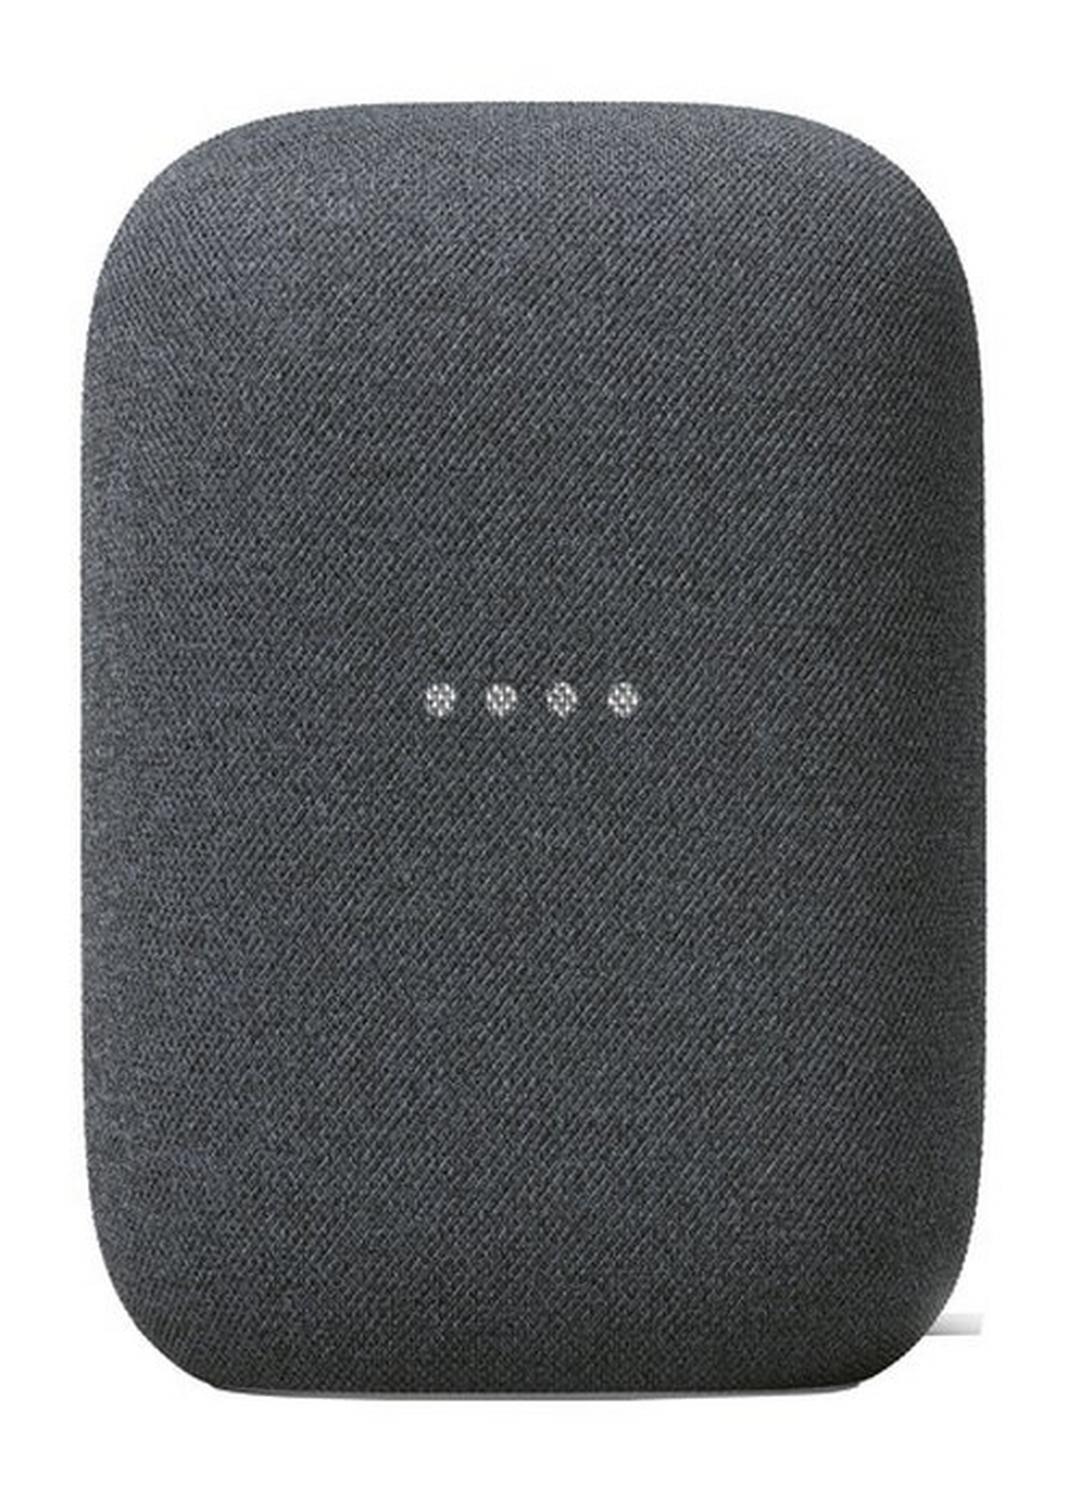 Google Nest Audio Wireless Speaker - Charcoal